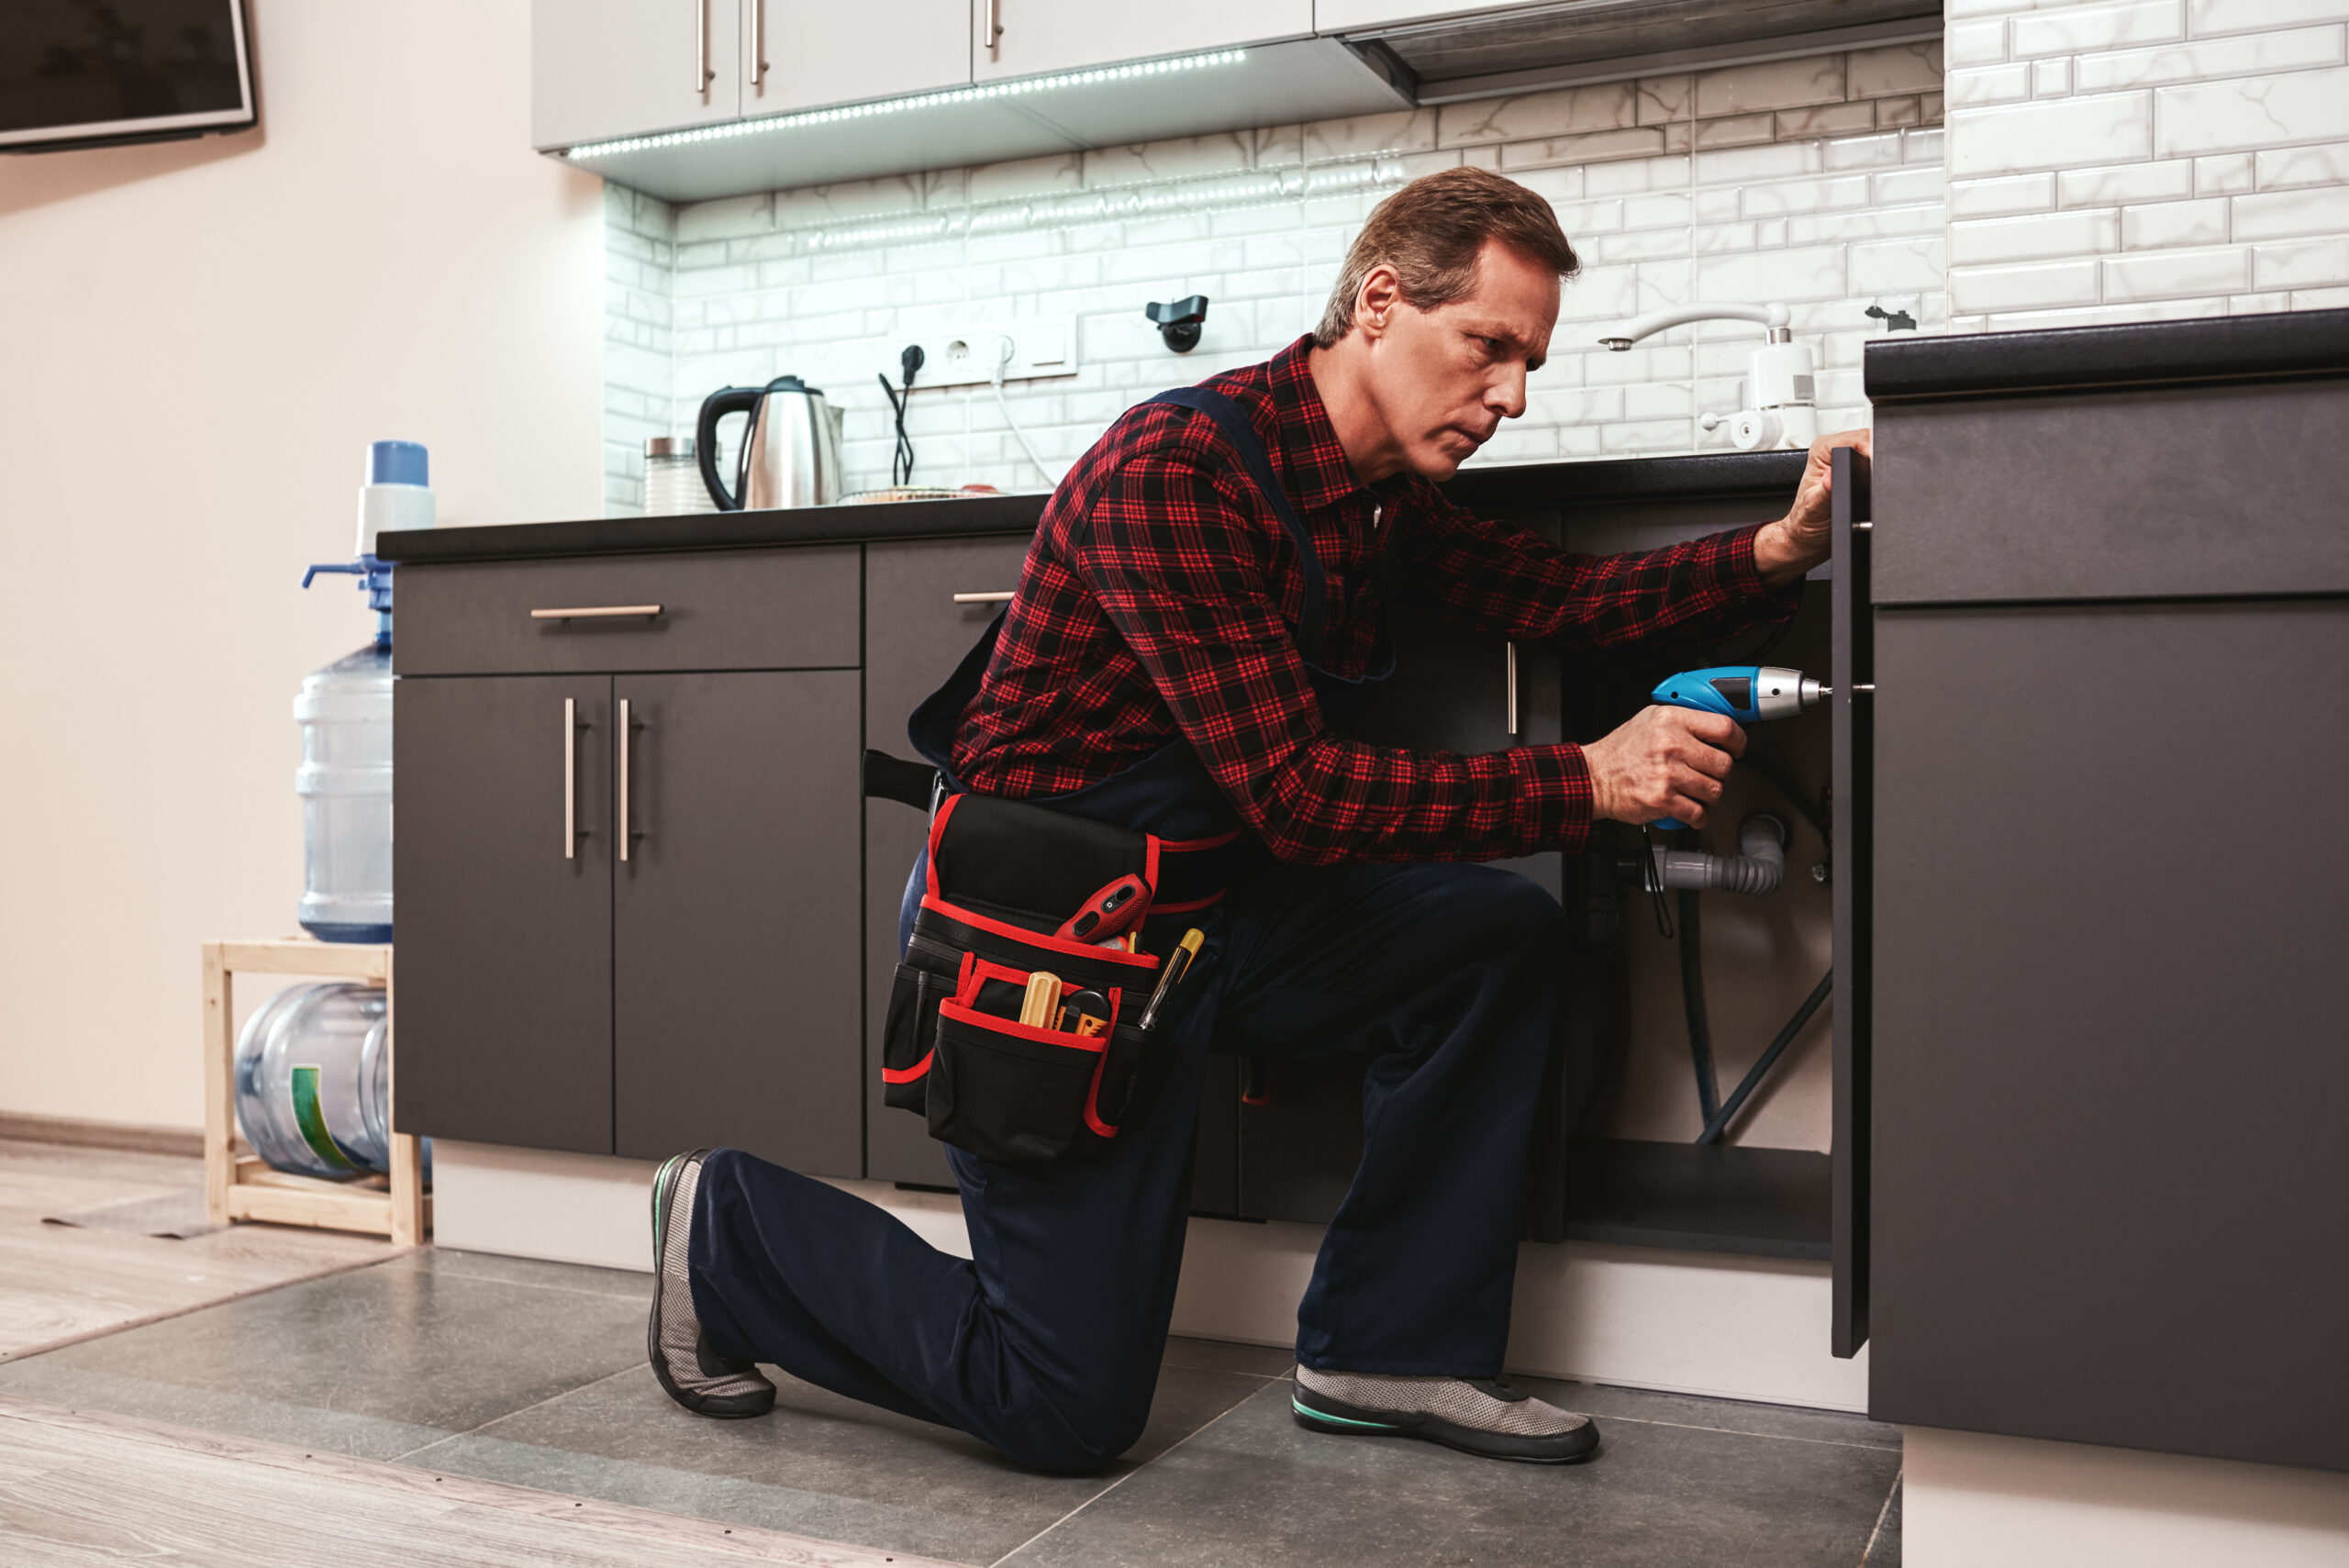 Handyman at work. Repairing kitchen shelves by perforator. Artisan senior adult man trying to fix kitchen shelves